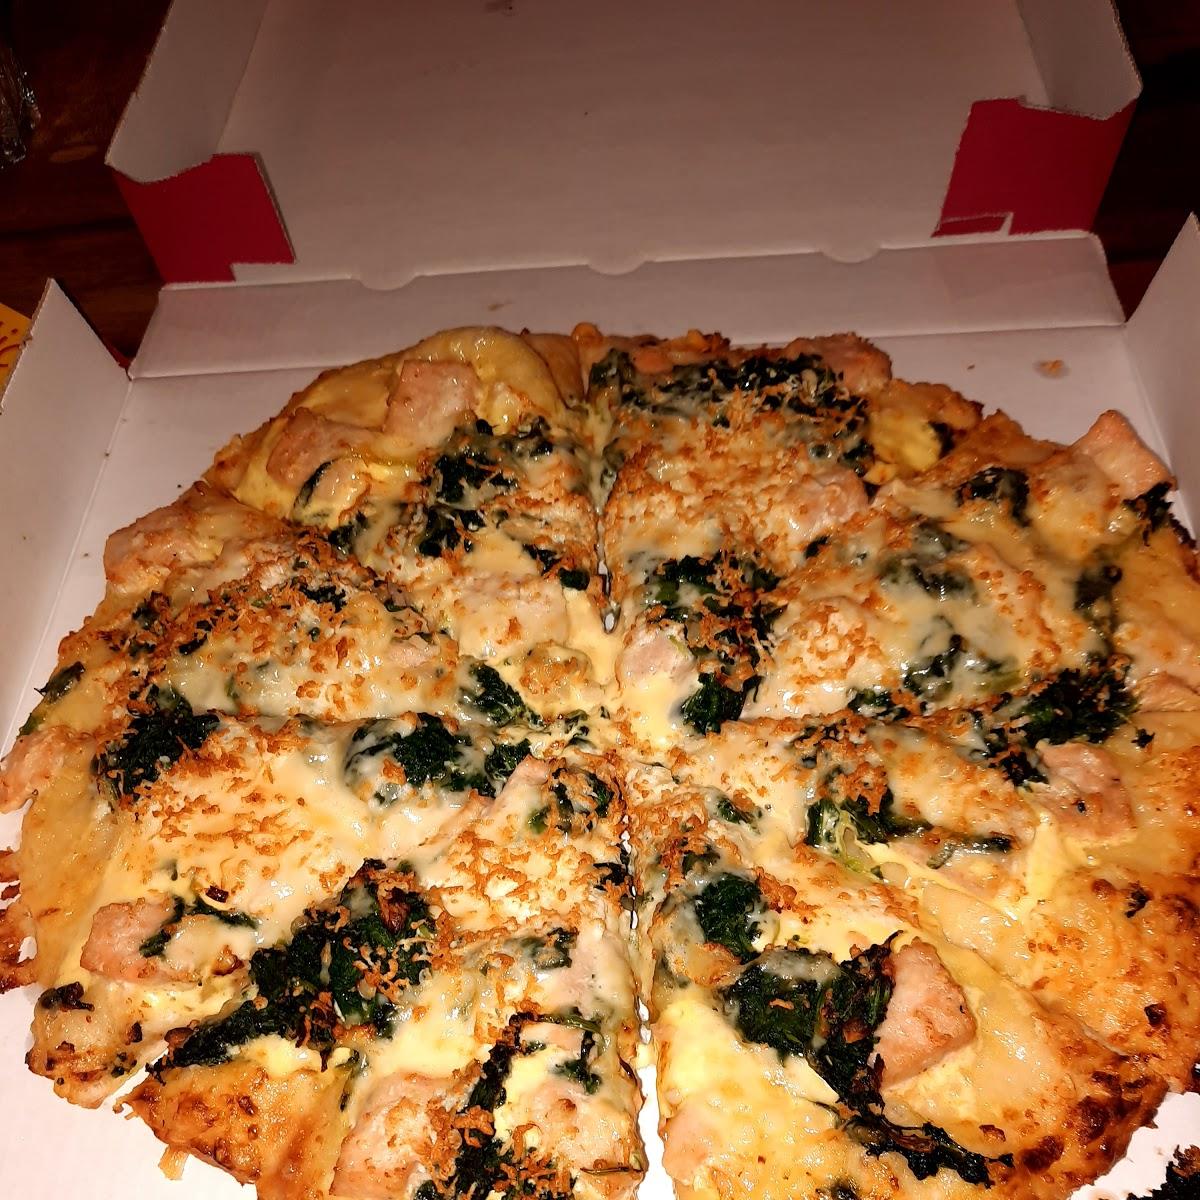 Restaurant "Flying Pizza" in Wernigerode